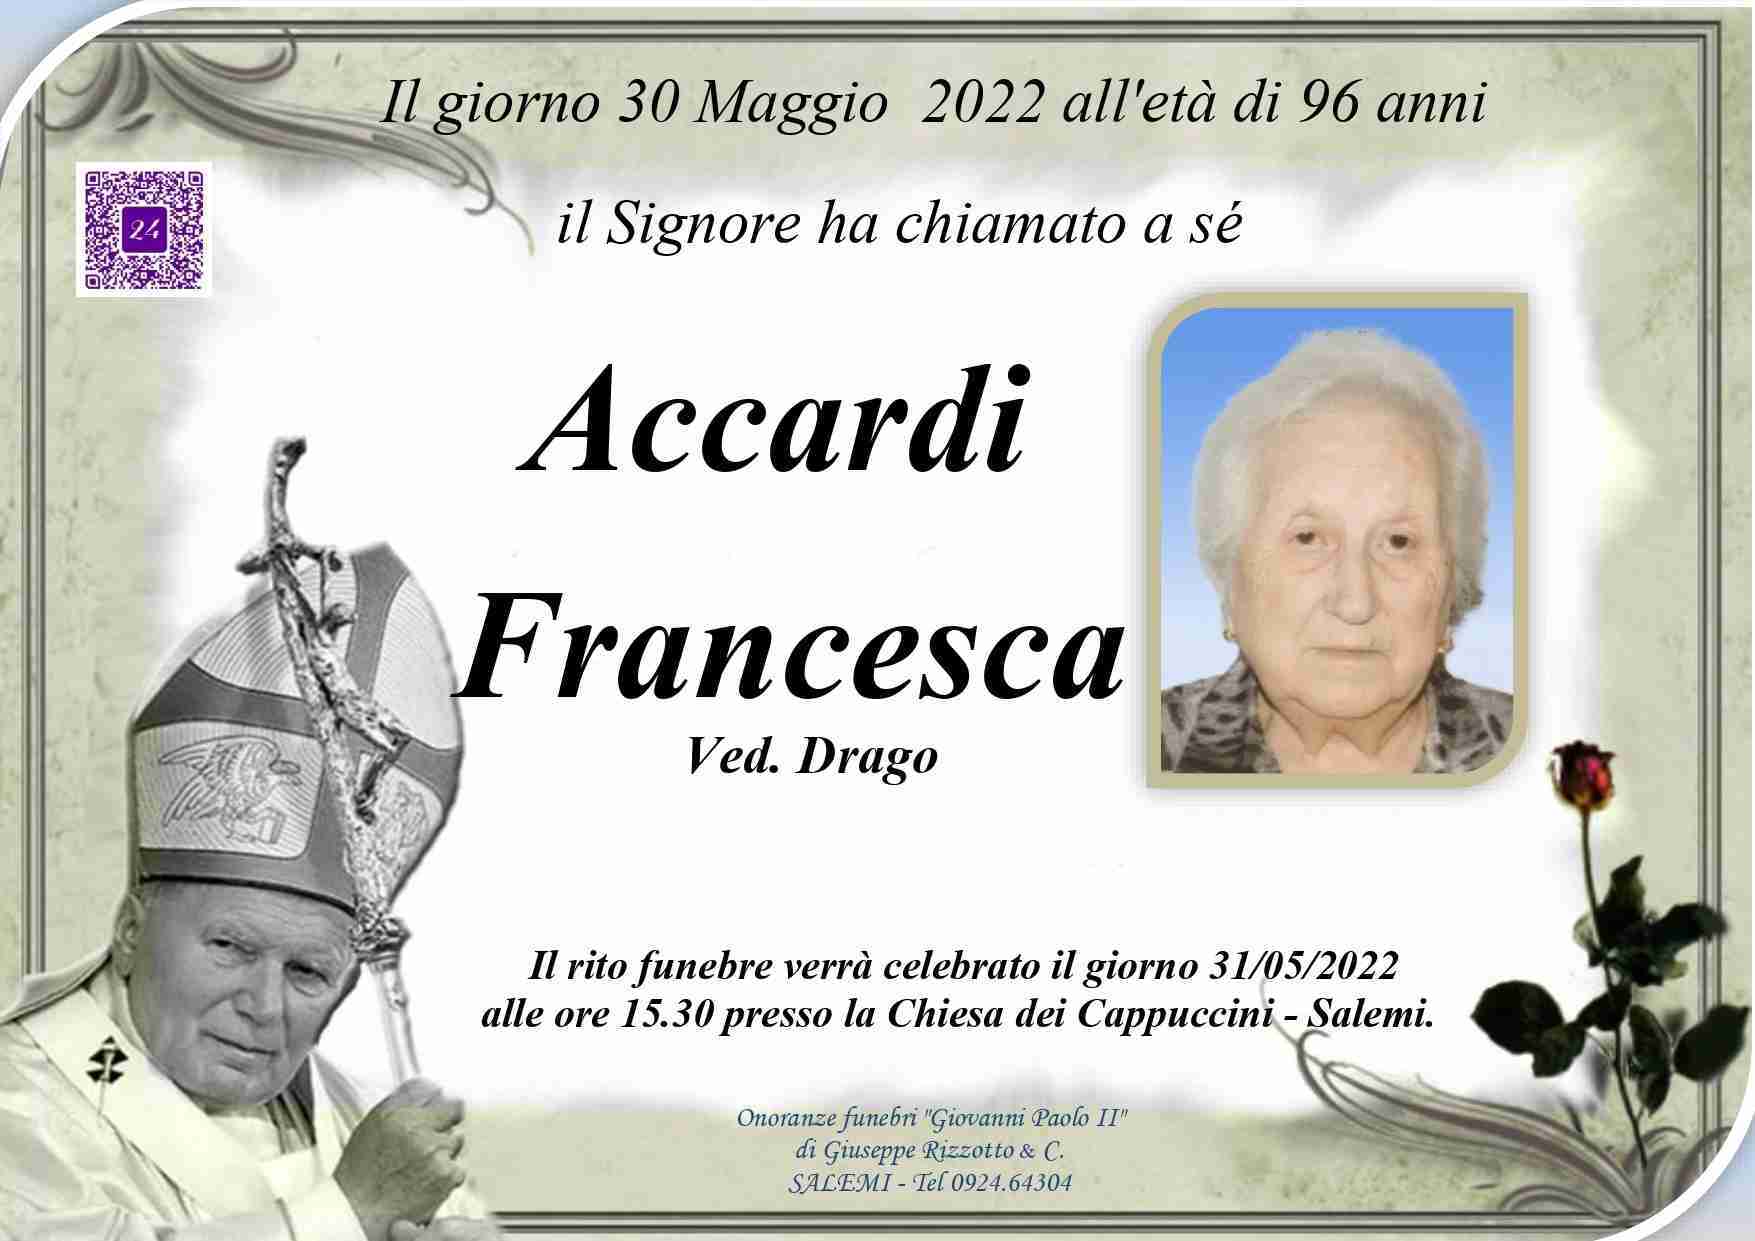 Francesca Accardi